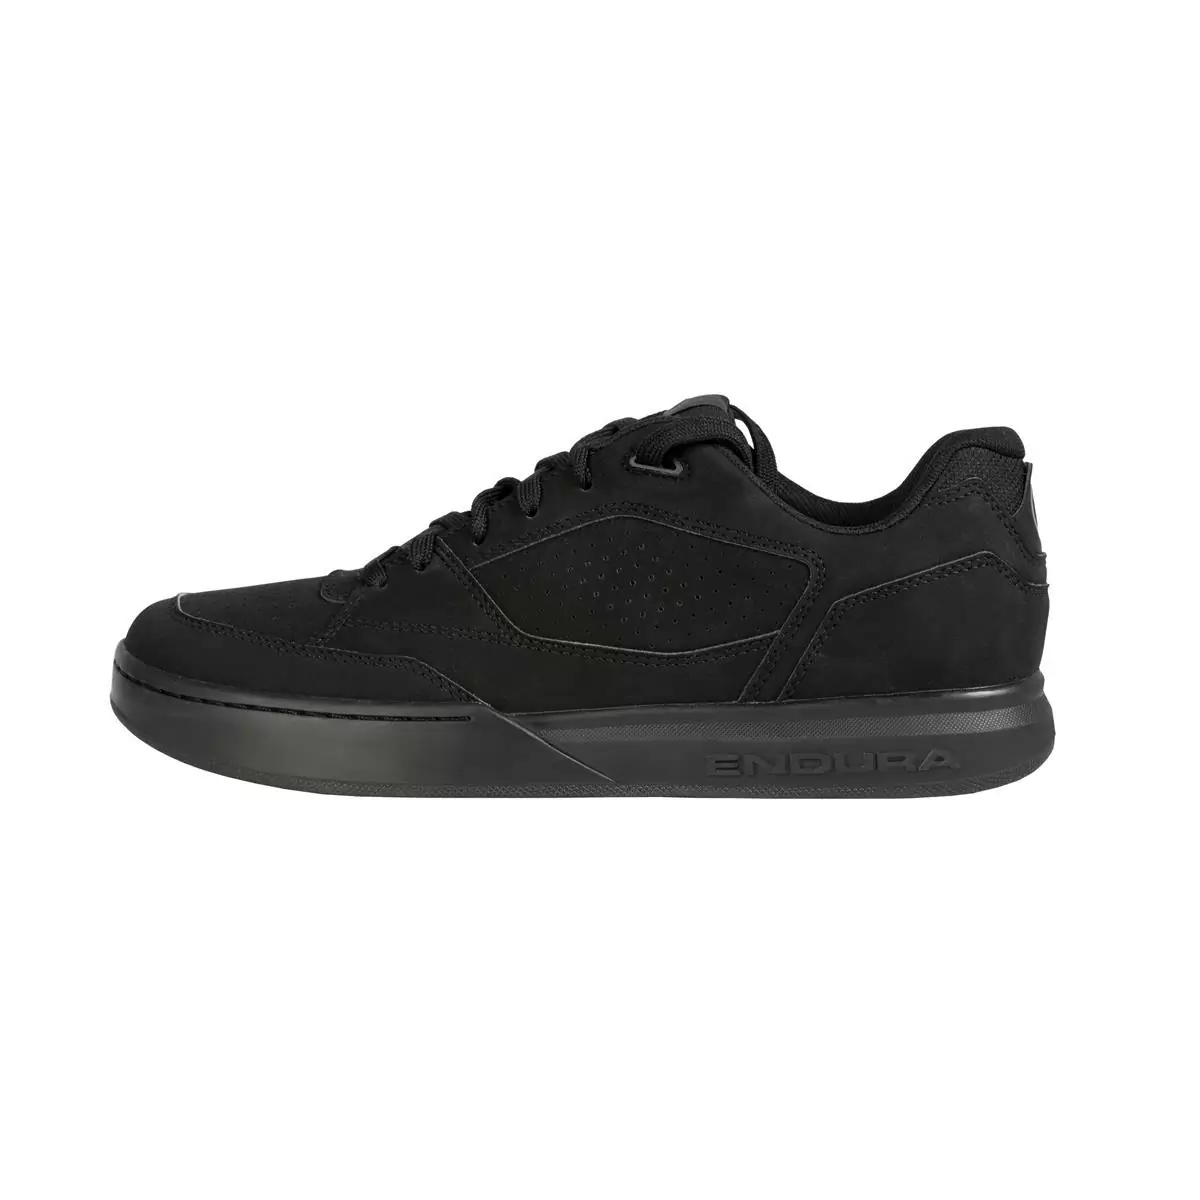 Hummvee Flat Pedal Shoes Black Size 39 #1